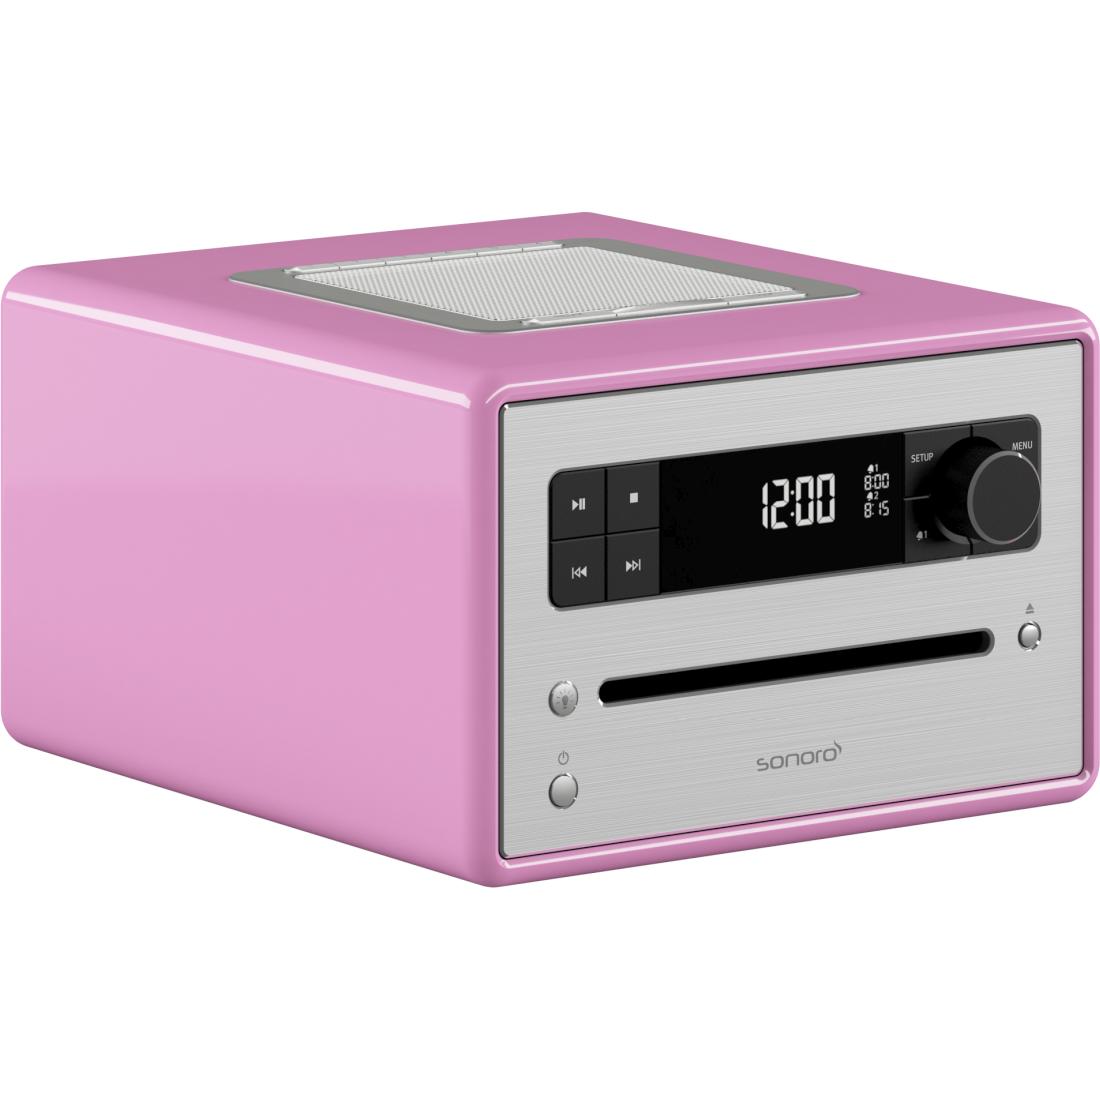 sonor CD 2 Radio / CD-Player
pink